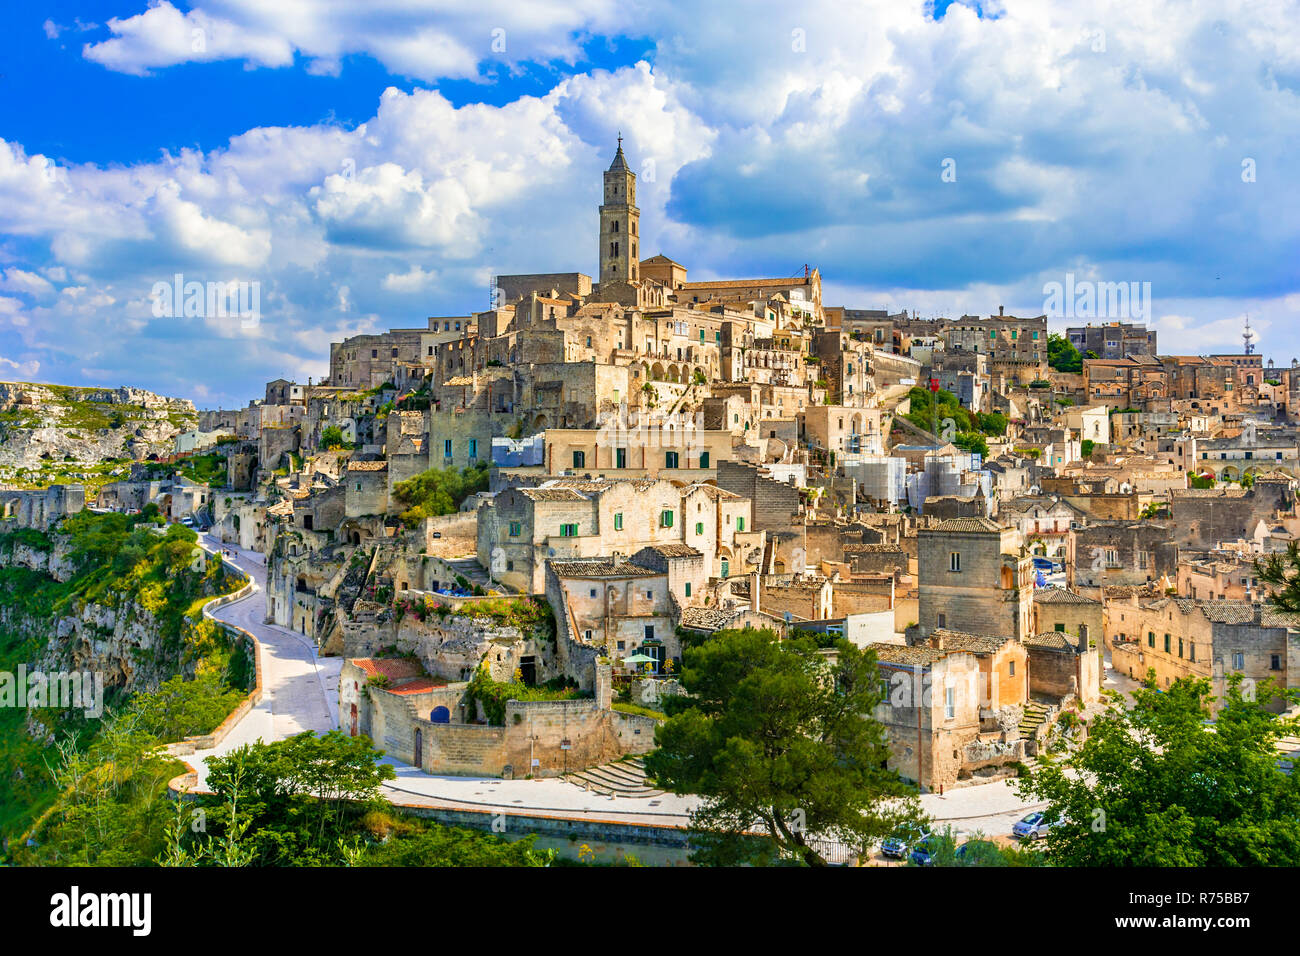 Matera, Basilicata, Italy: Landscape view of the old town - Sassi di Matera Stock Photo - Alamy